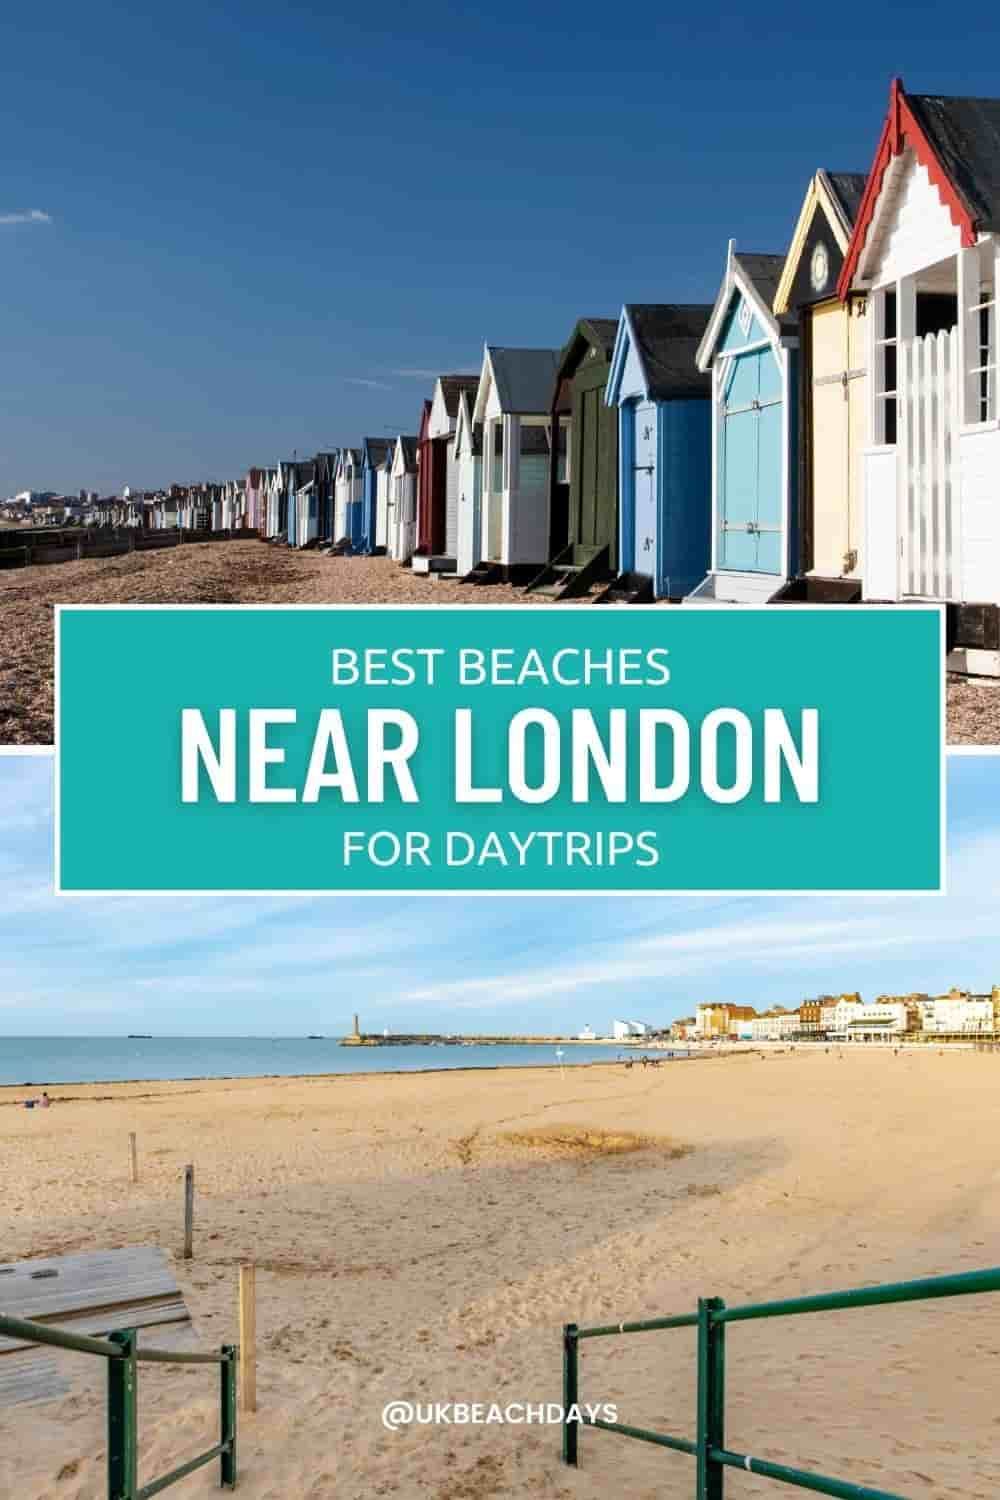 Best beaches near London